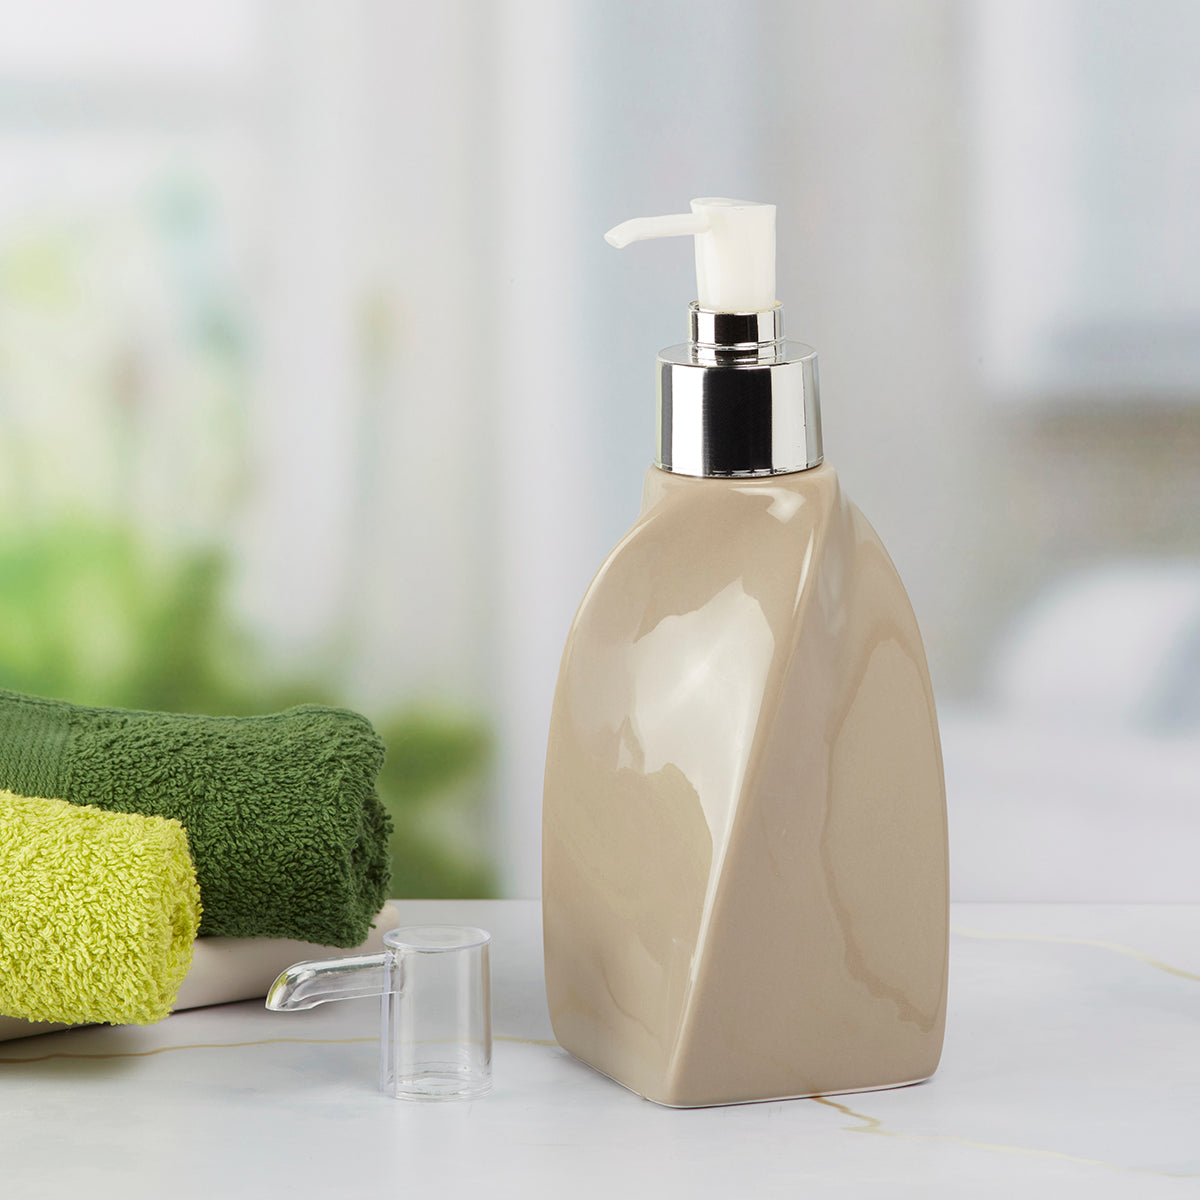 Kookee Ceramic Soap Dispenser for Bathroom handwash, refillable pump bottle for Kitchen hand wash basin, Set of 1, Fawn (9658)